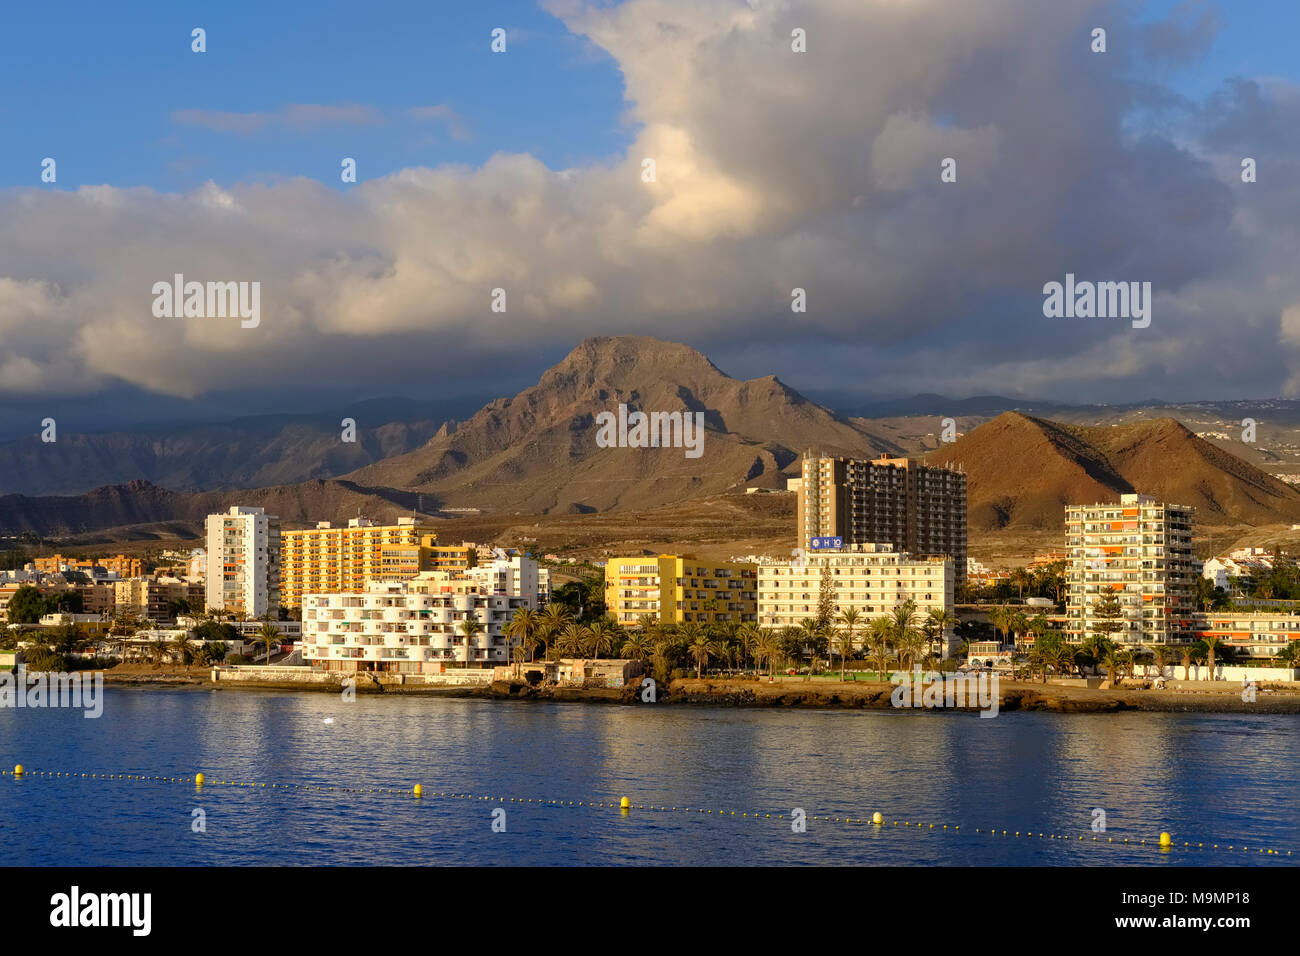 Hotels on the coast, Los Cristianos, Tenerife, Canary Islands, Spain Stock Photo